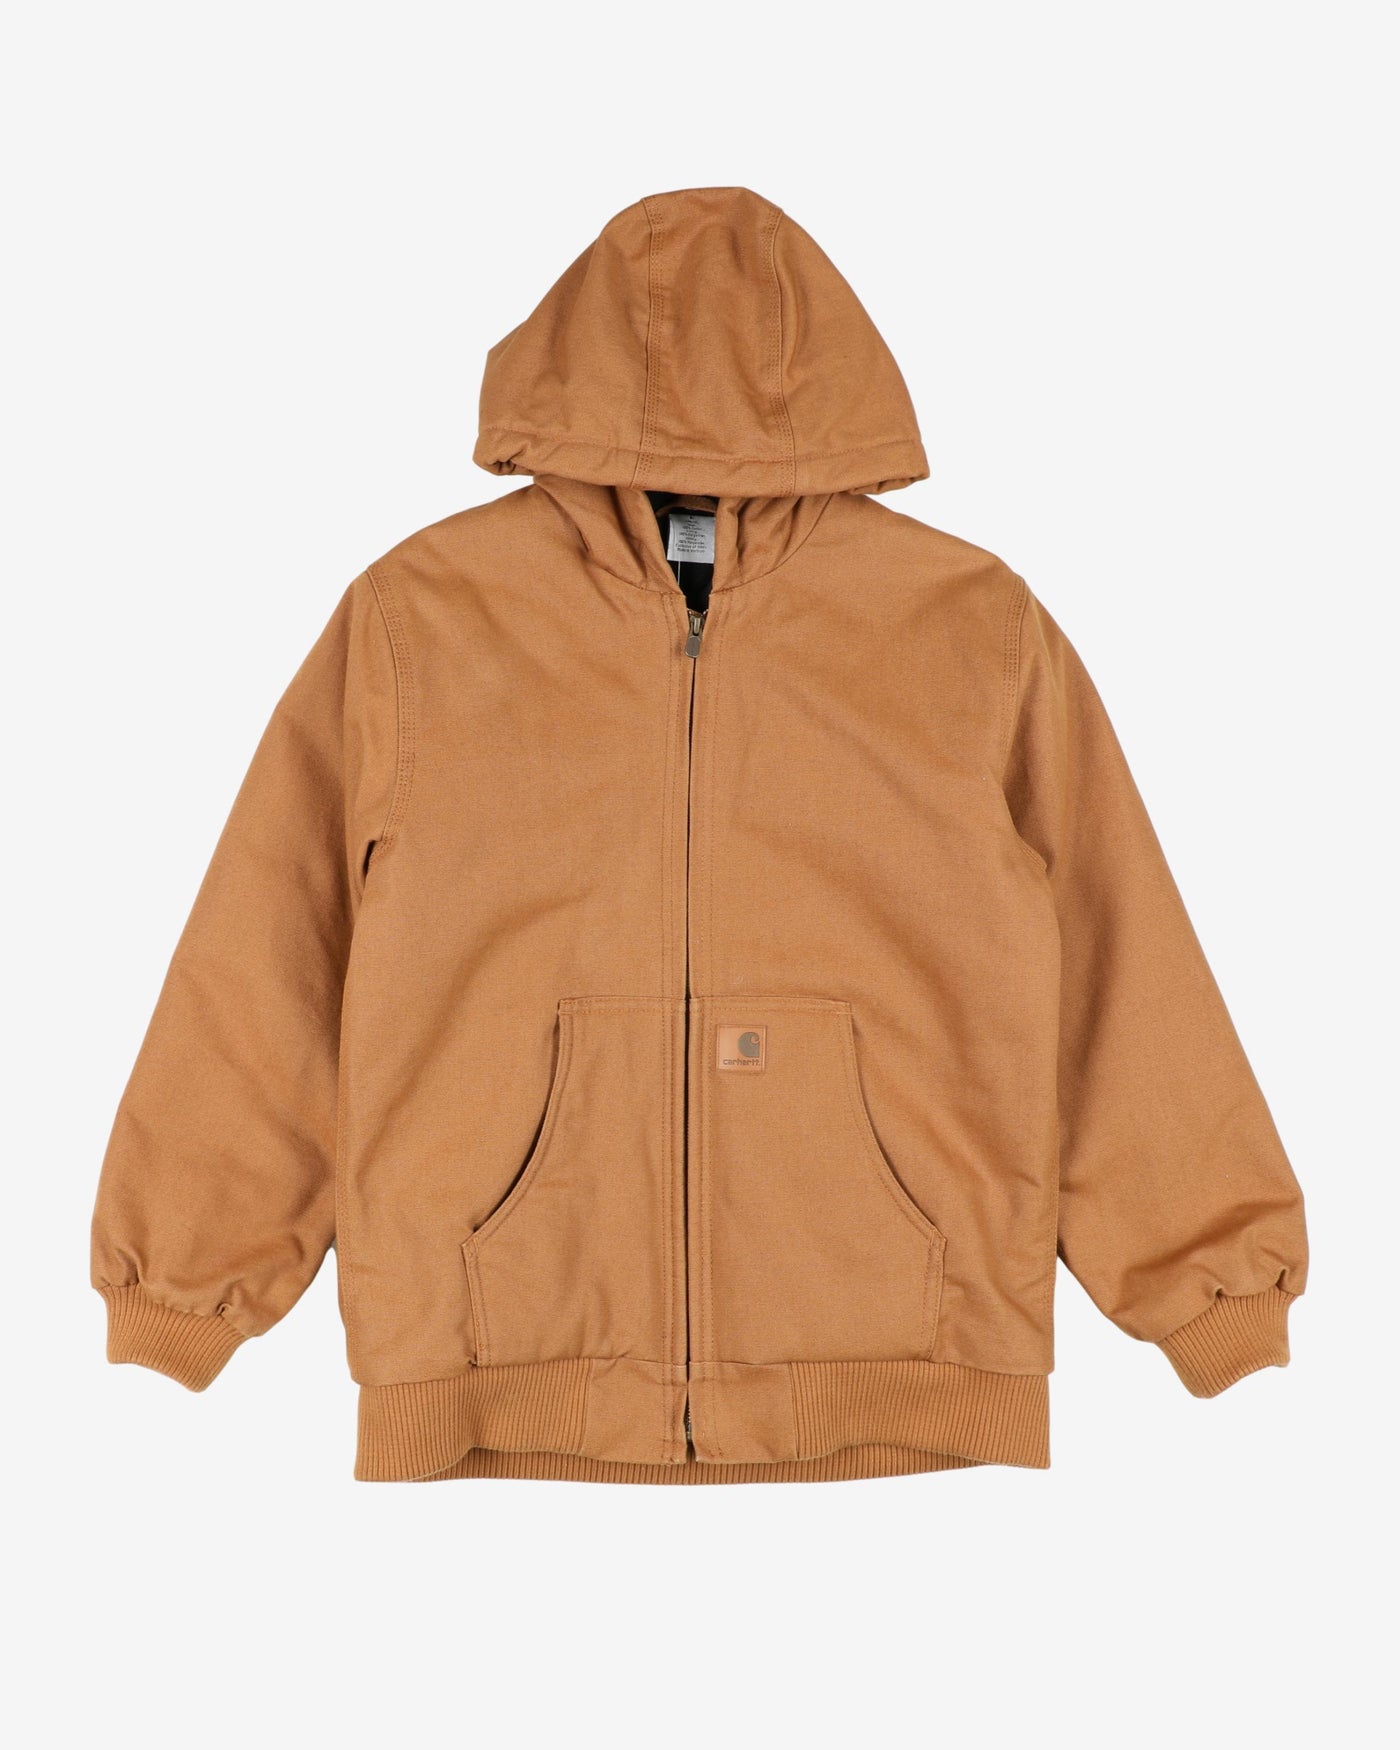 Vintage Carhartt children's hooded workwear jacket - L (youth)